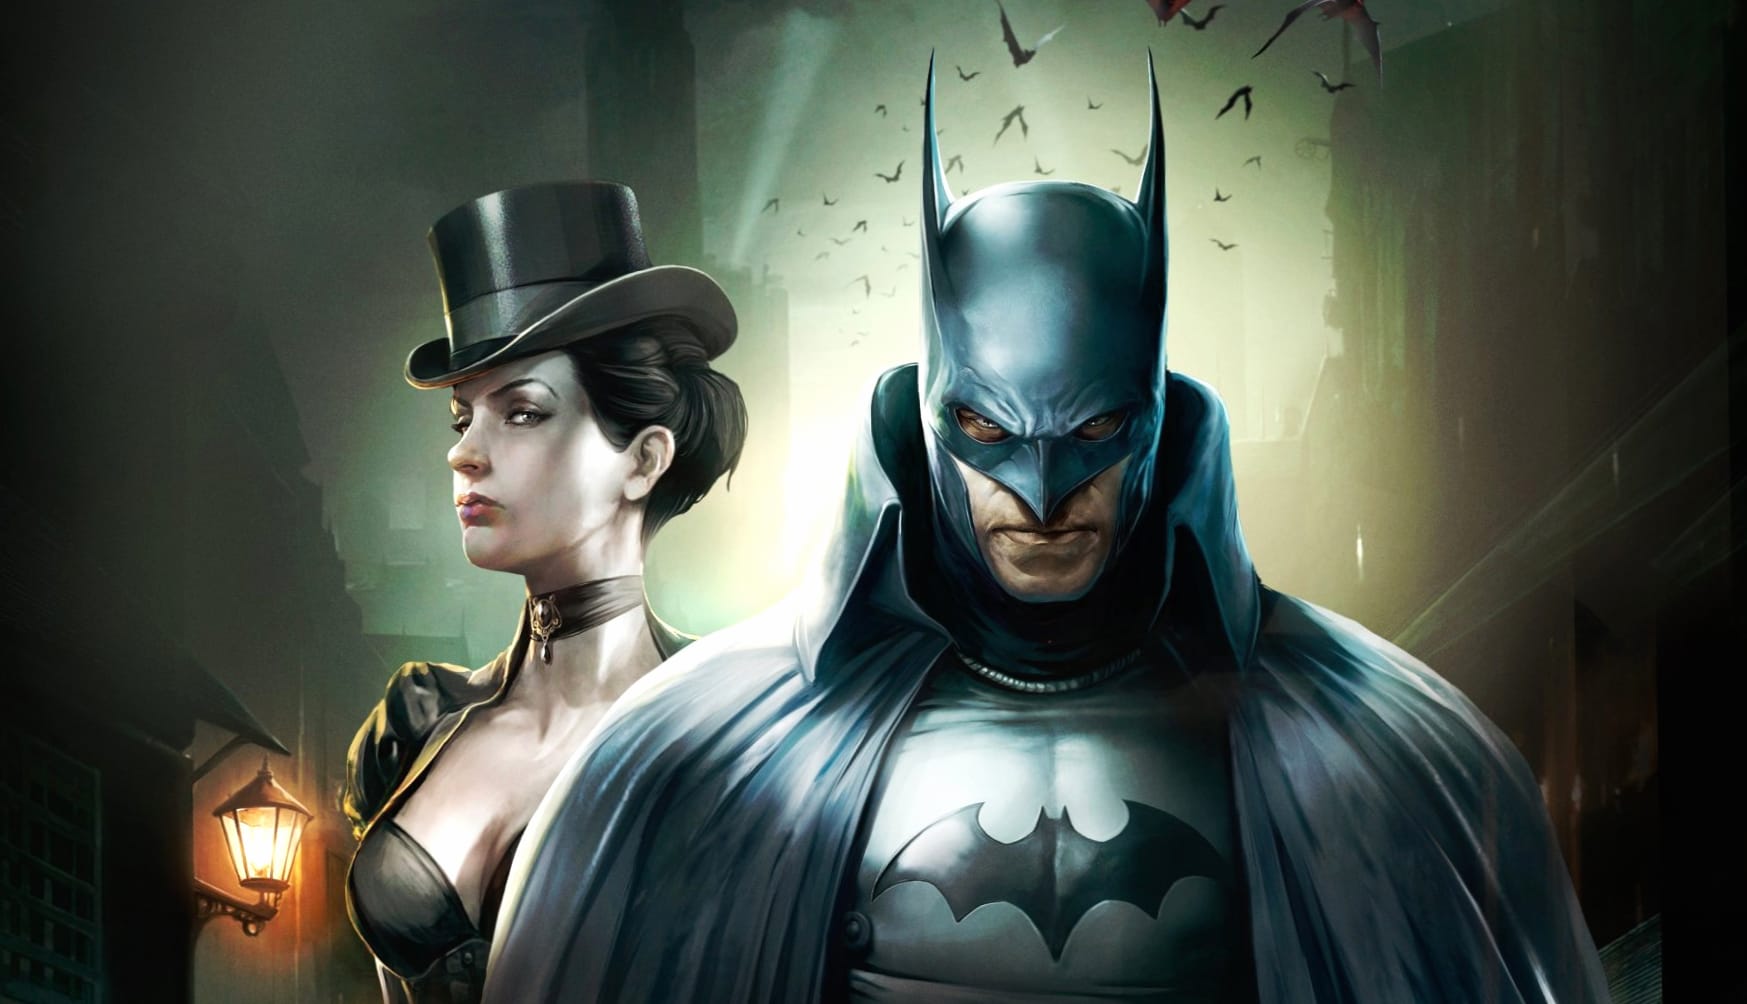 Batman Gotham by Gaslight at 1280 x 960 size wallpapers HD quality